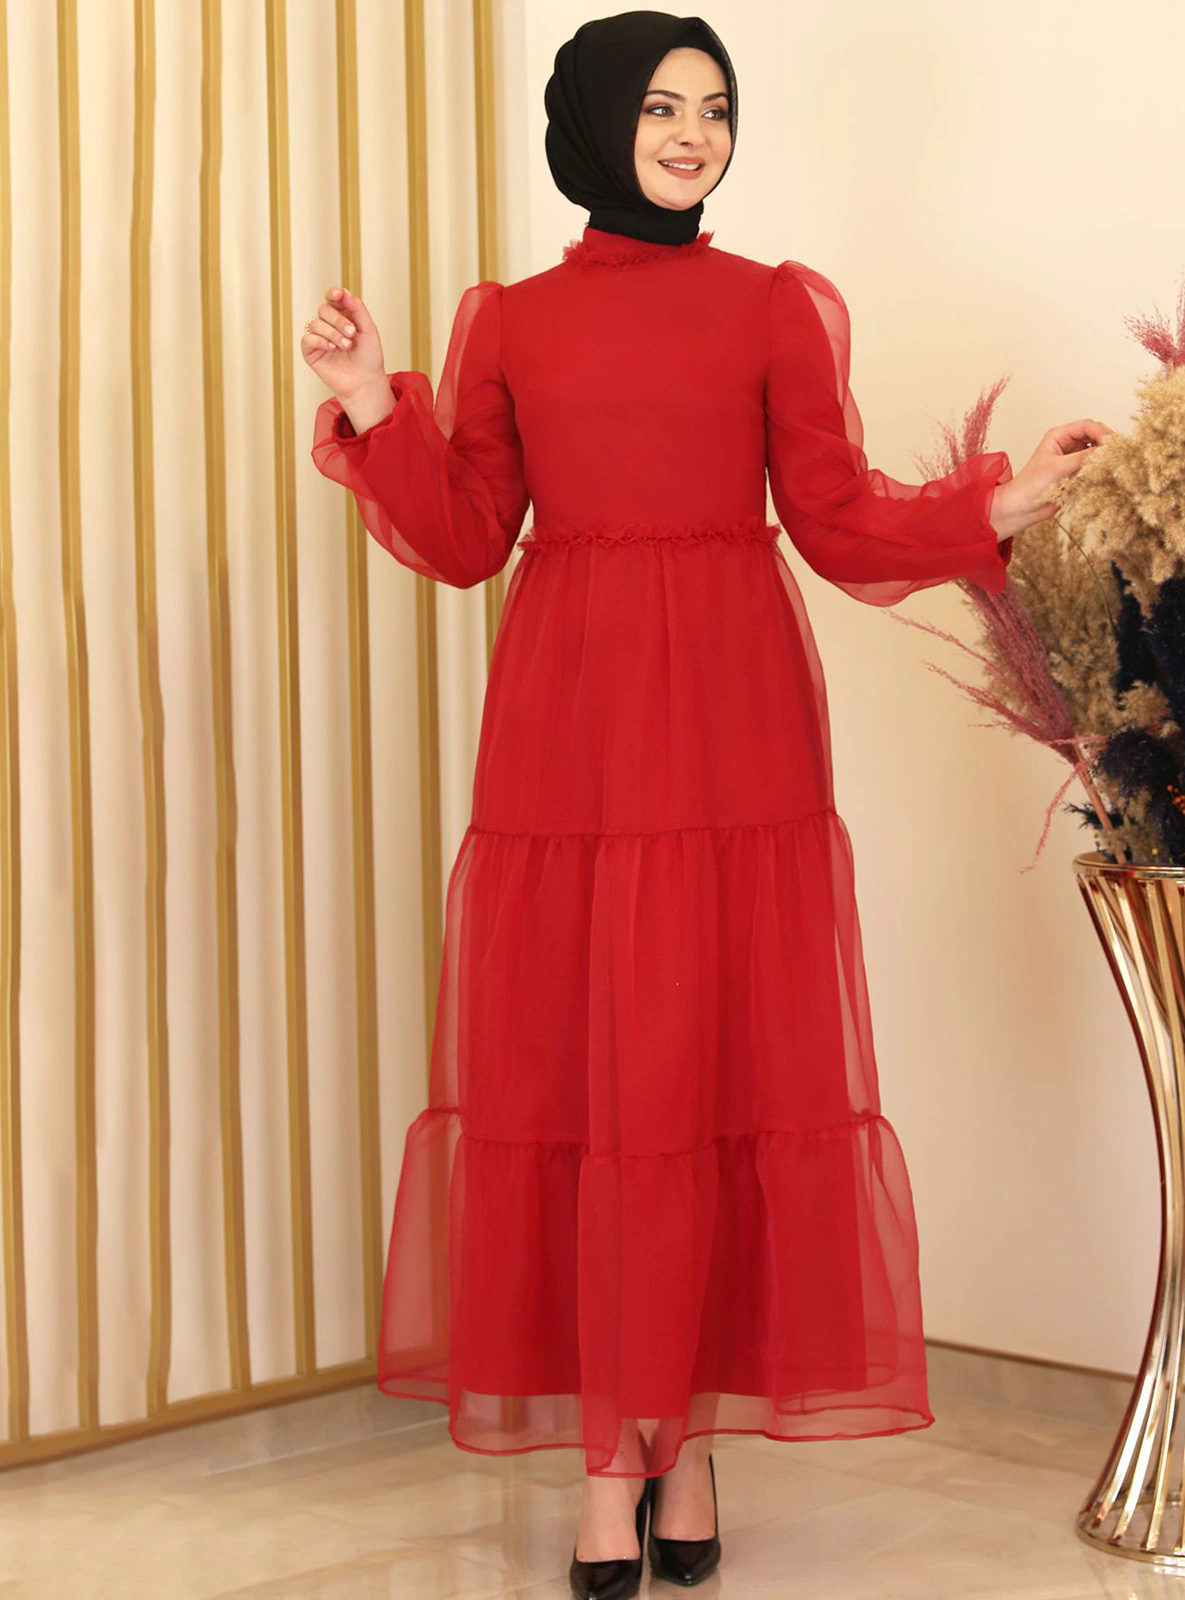 Fashion Showcase Design Kırmızı Elbise Modelleri